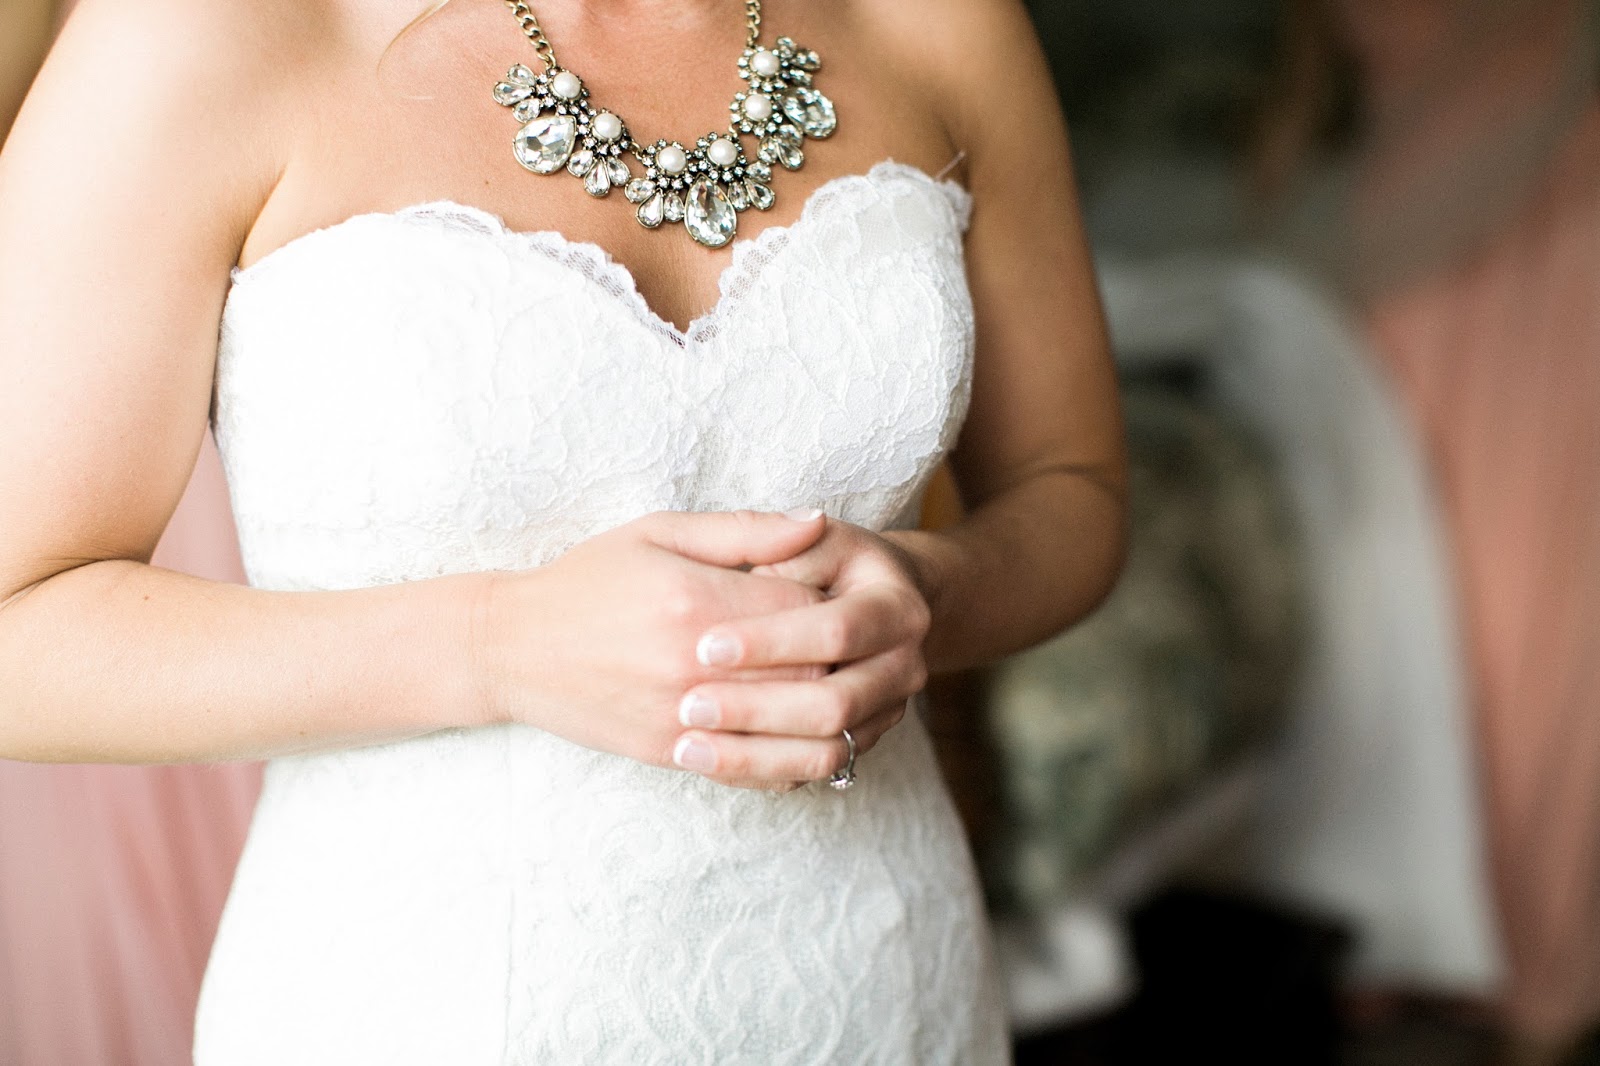 The Southeastern Bride | Amy Nicole Photo